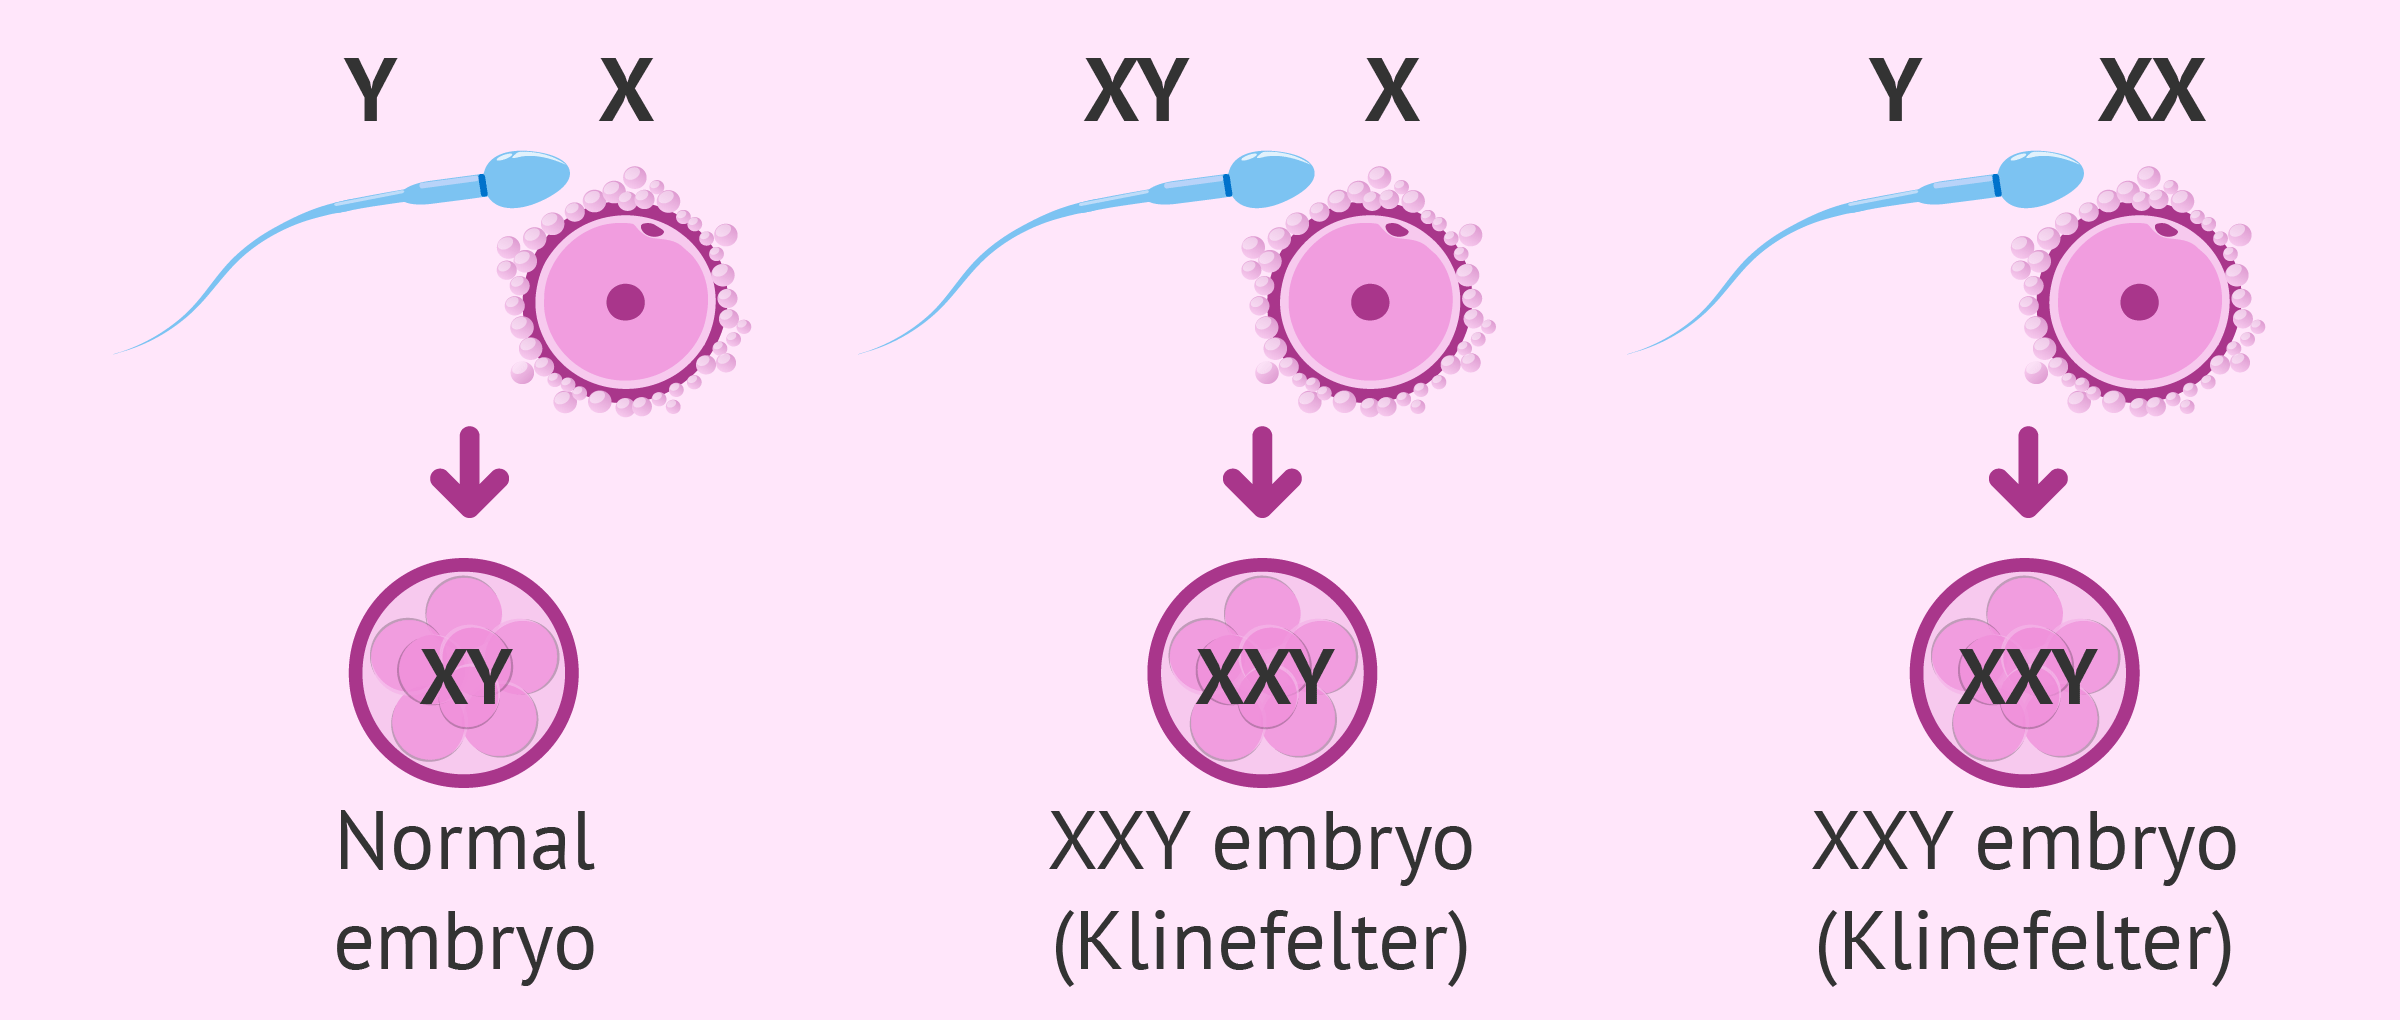 Klinefelter Syndrome Xxy Syndrome Symptoms Causes Fertility | The Best ...